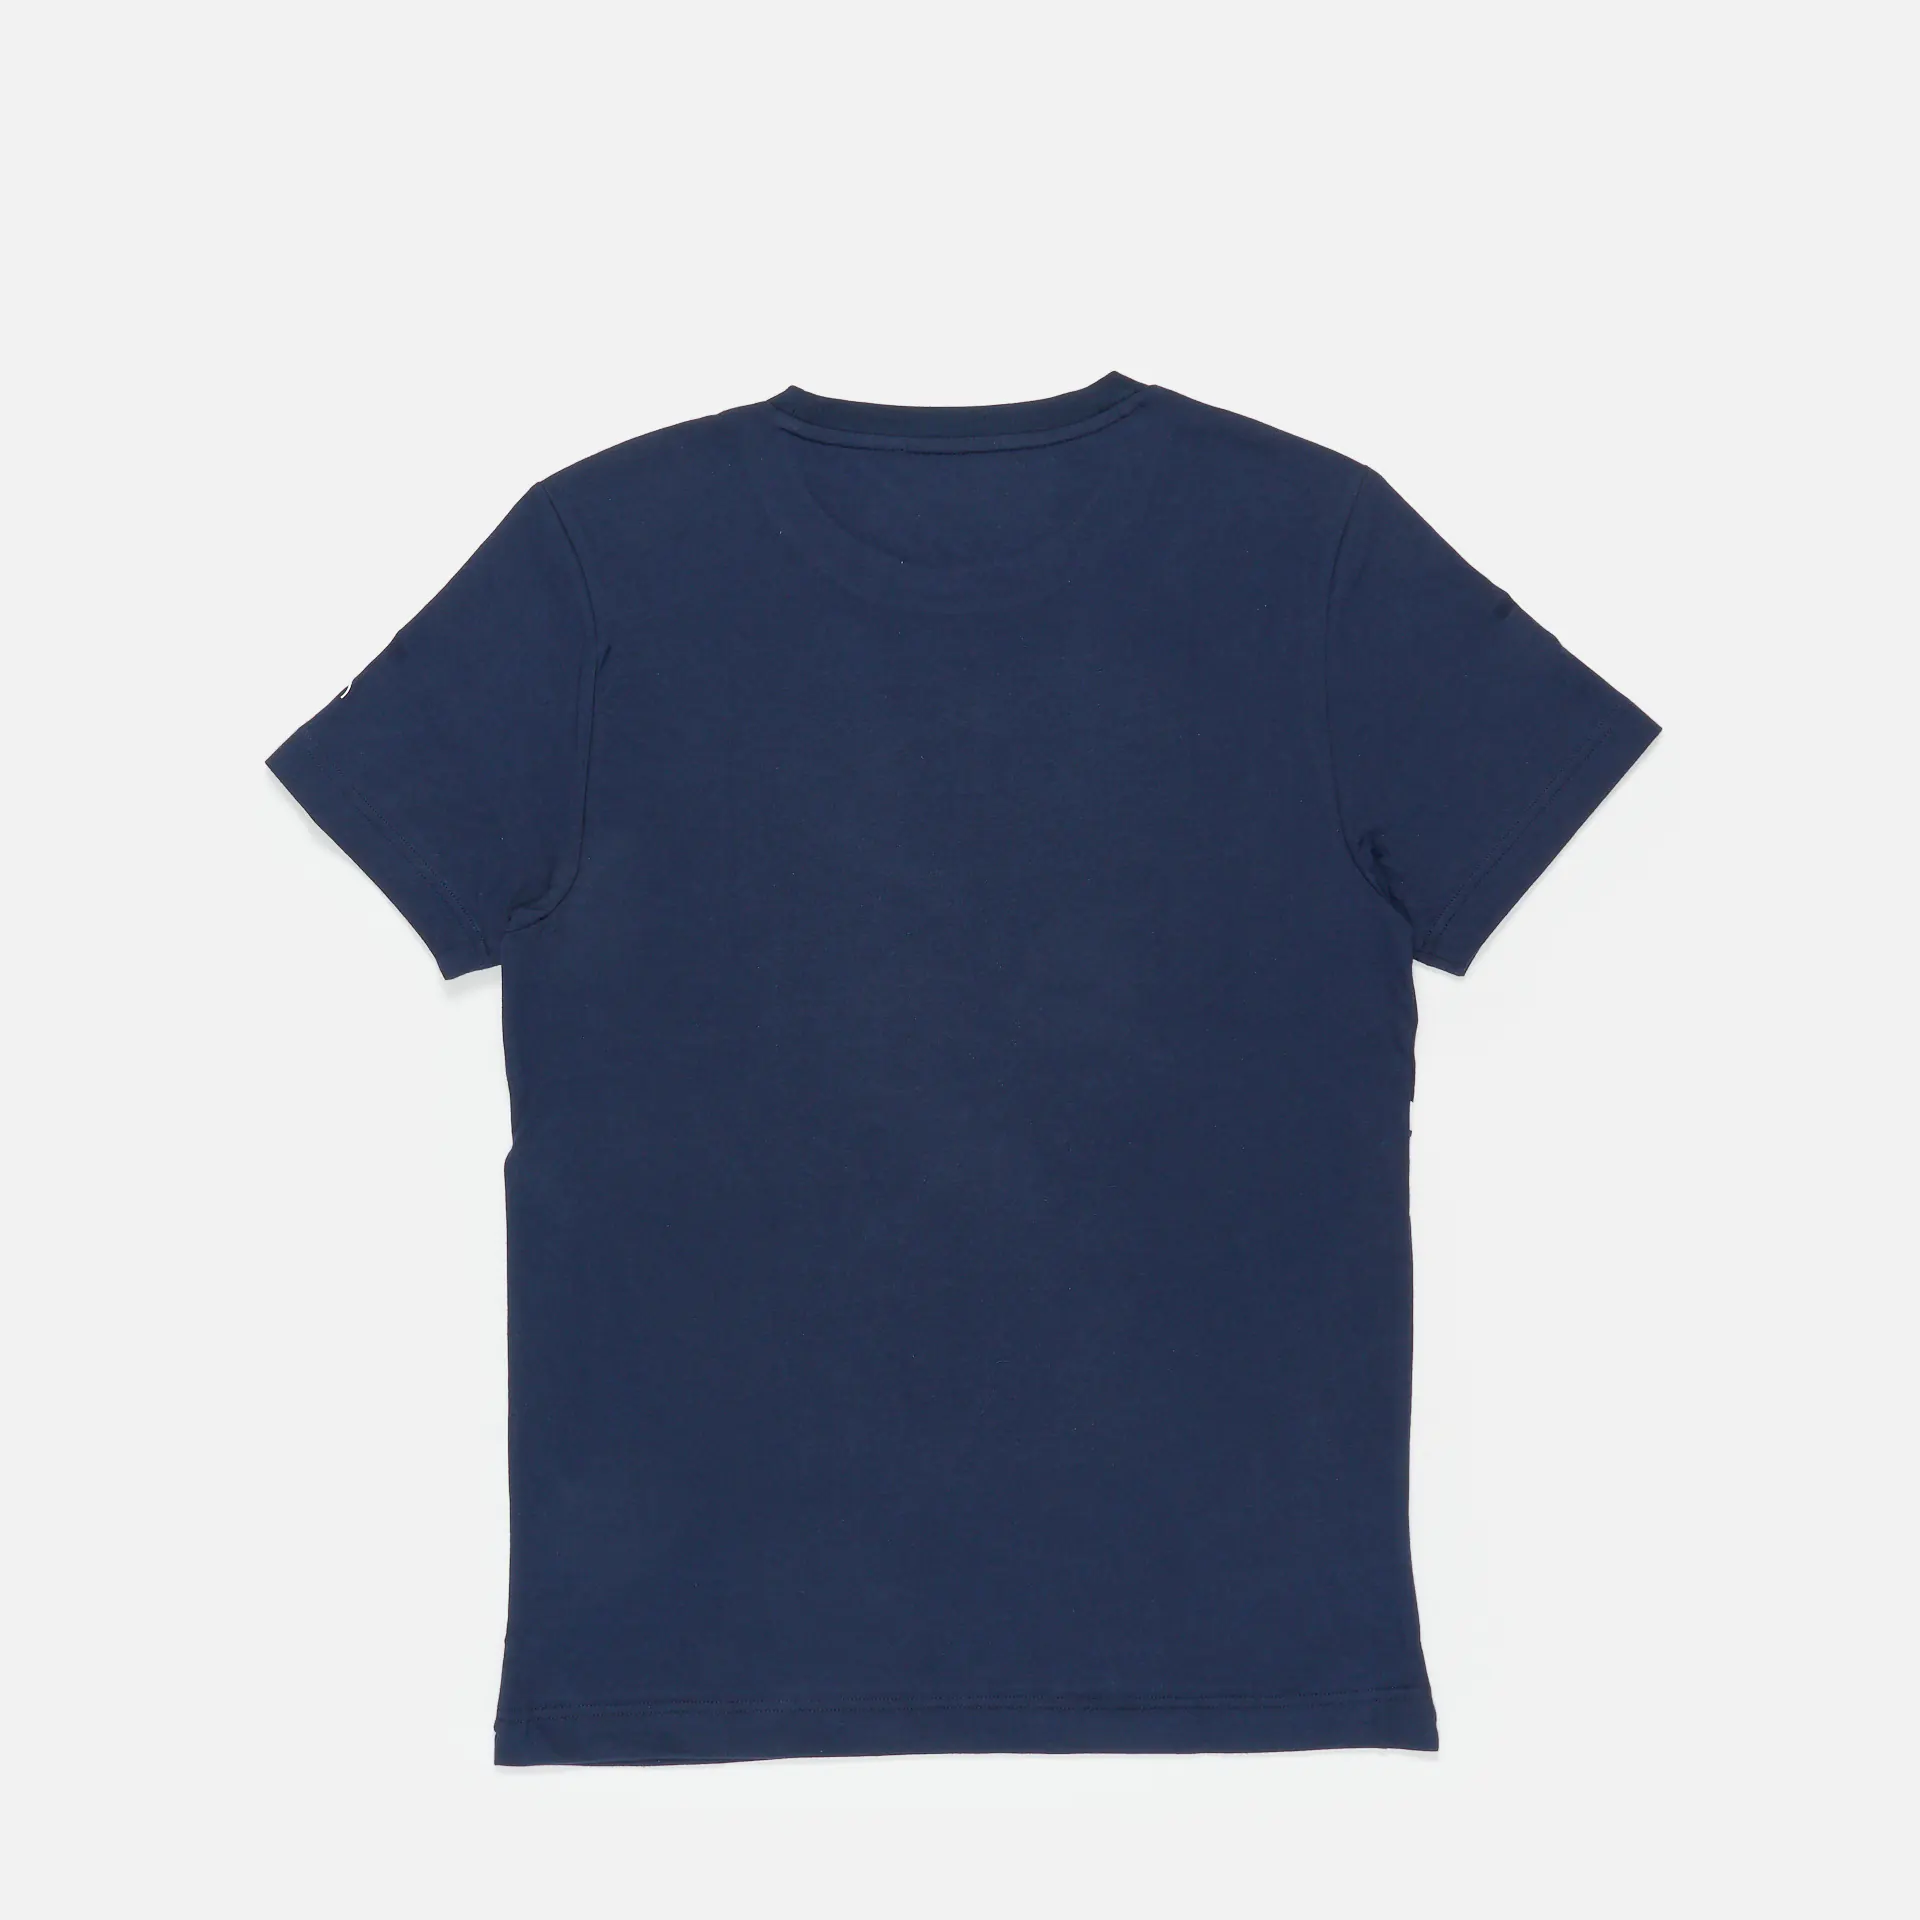 Lacoste Croco T-Shirt Navy Blue